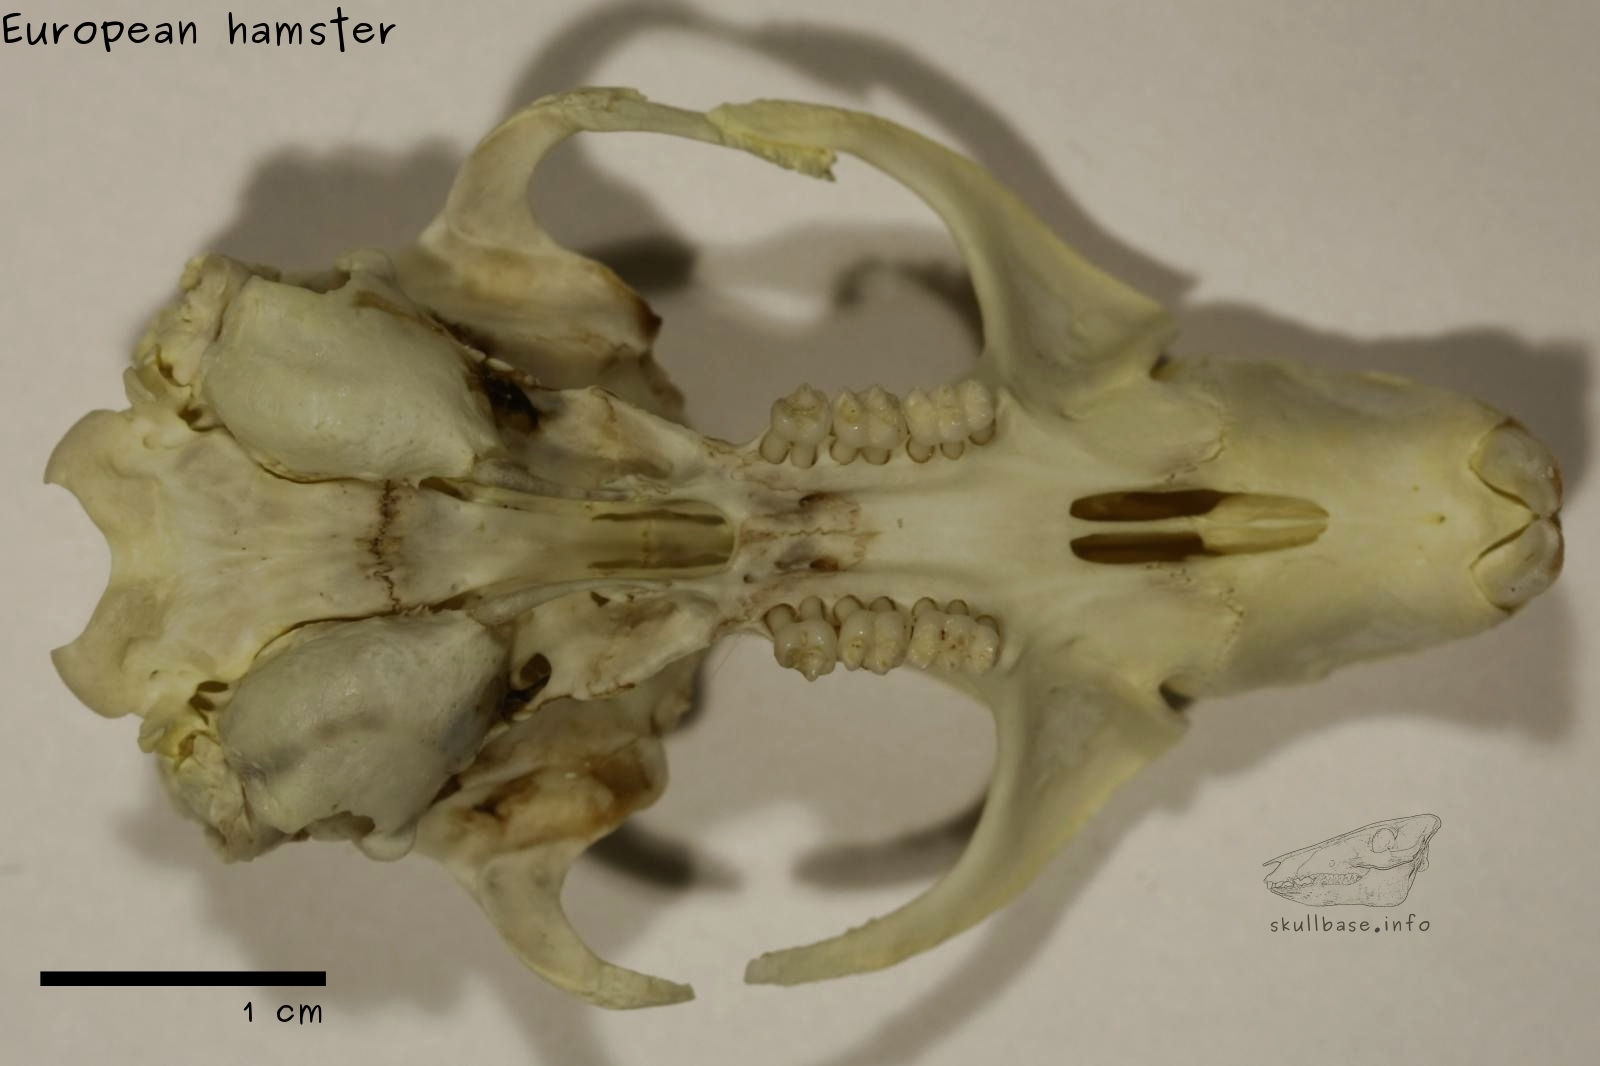 European hamster (Cricetus cricetus) skull ventral view